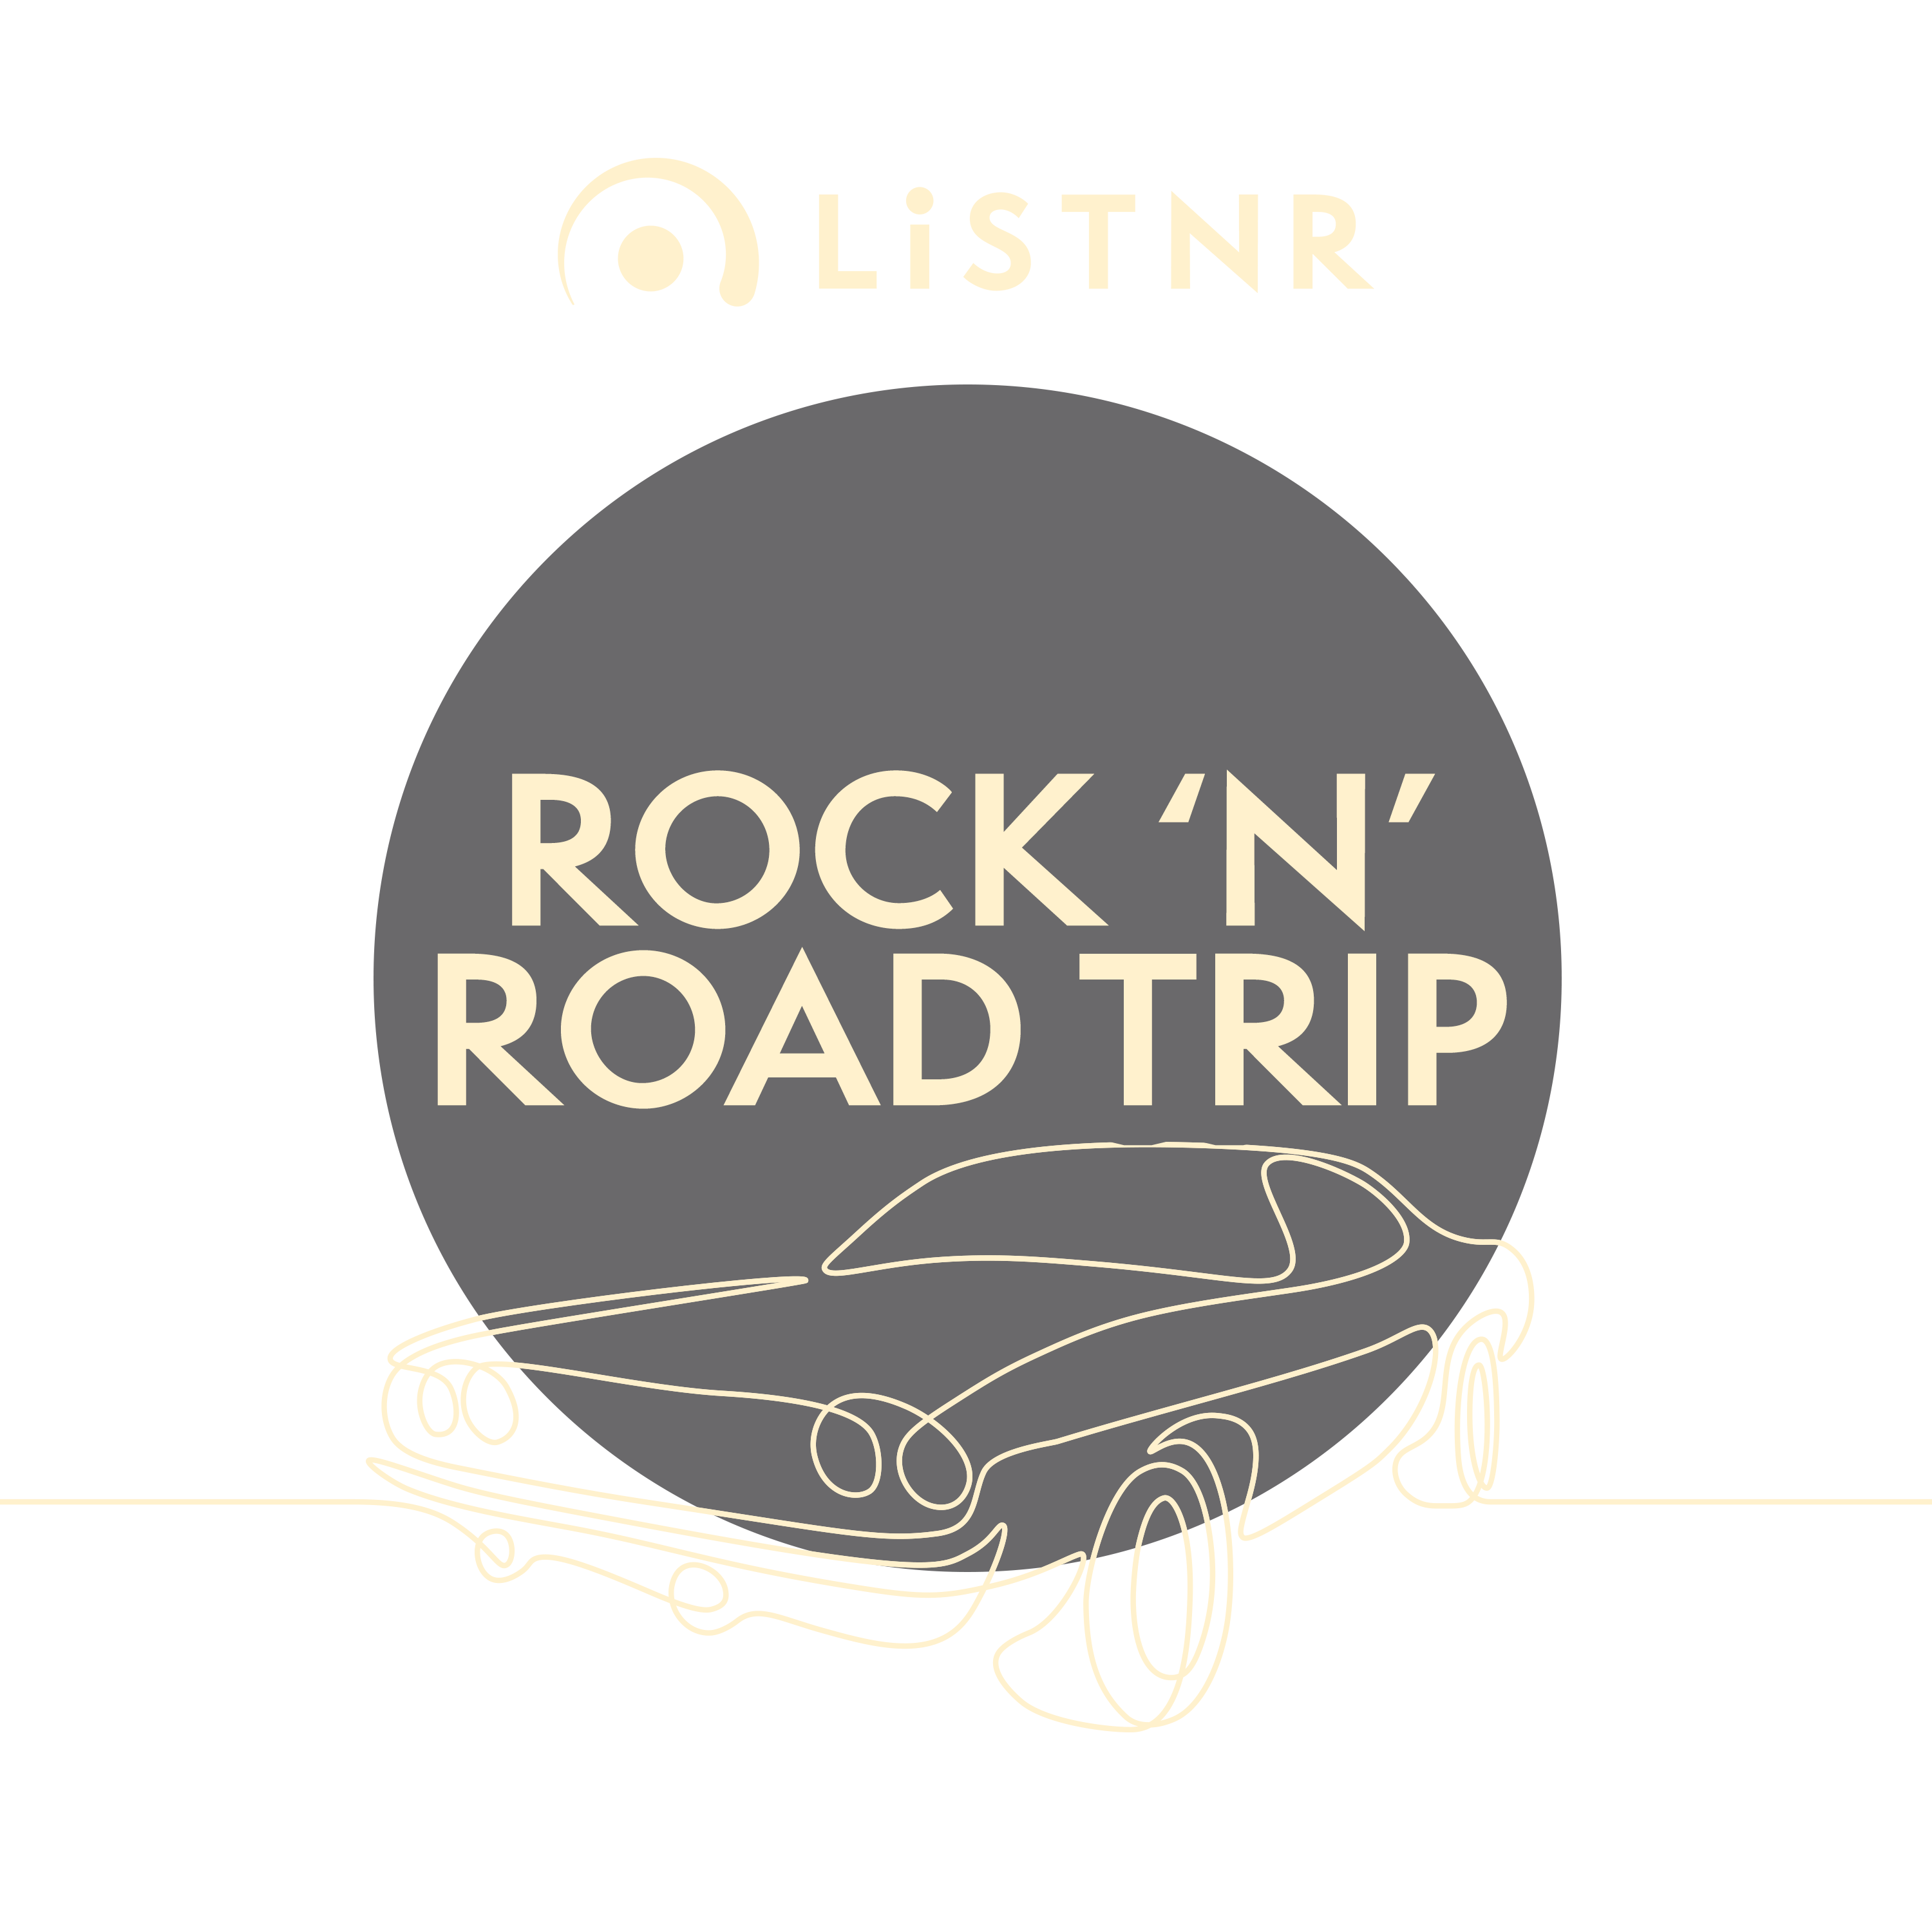 Rock 'n' Road Trip logo